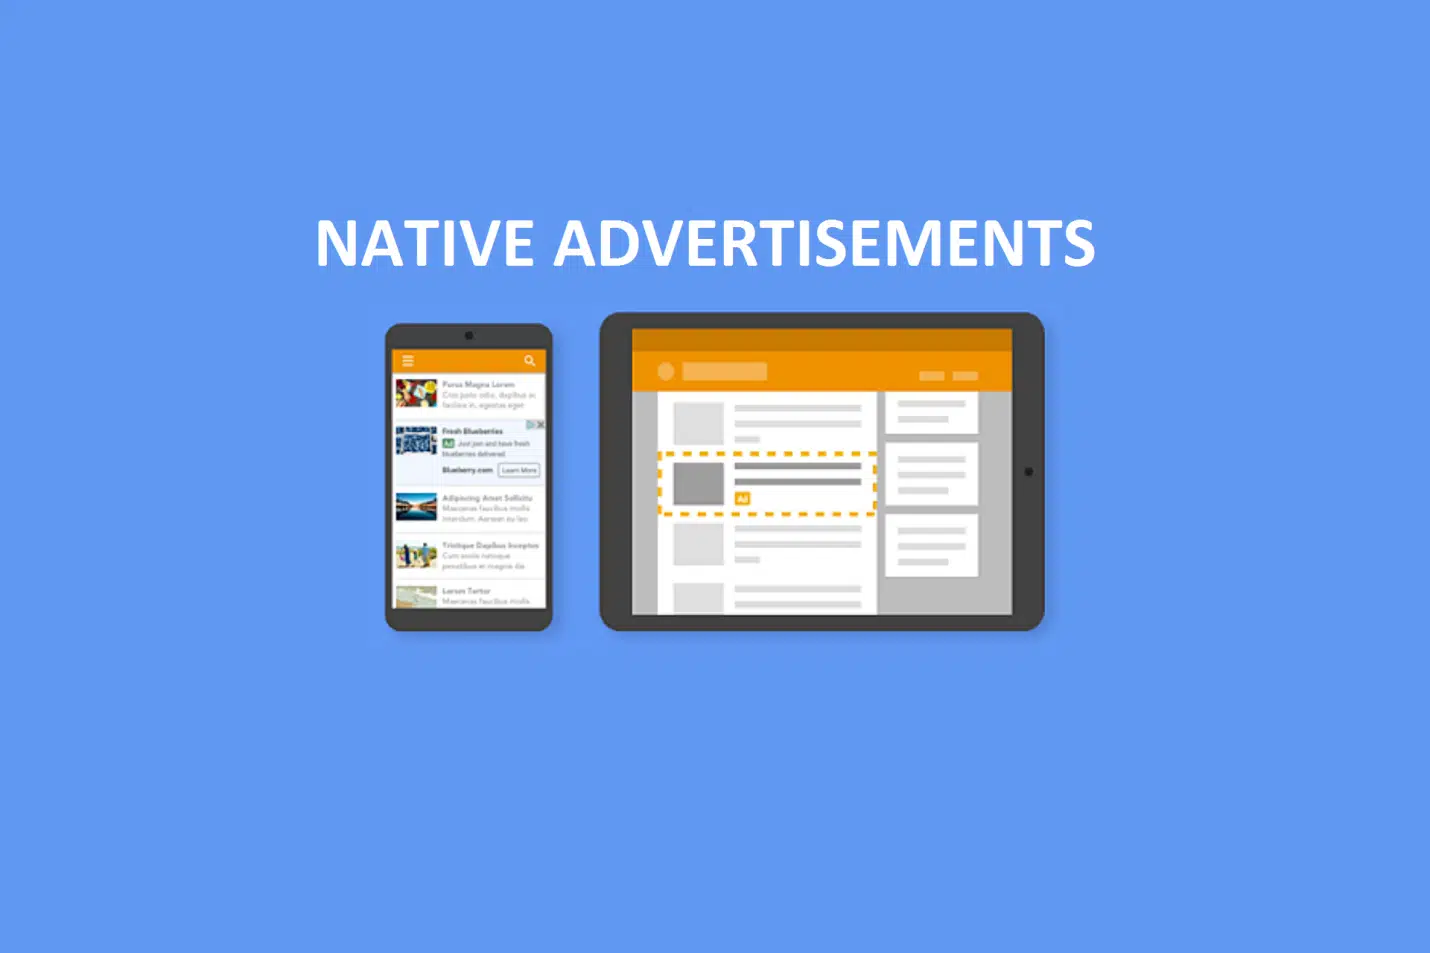 Native advertisements